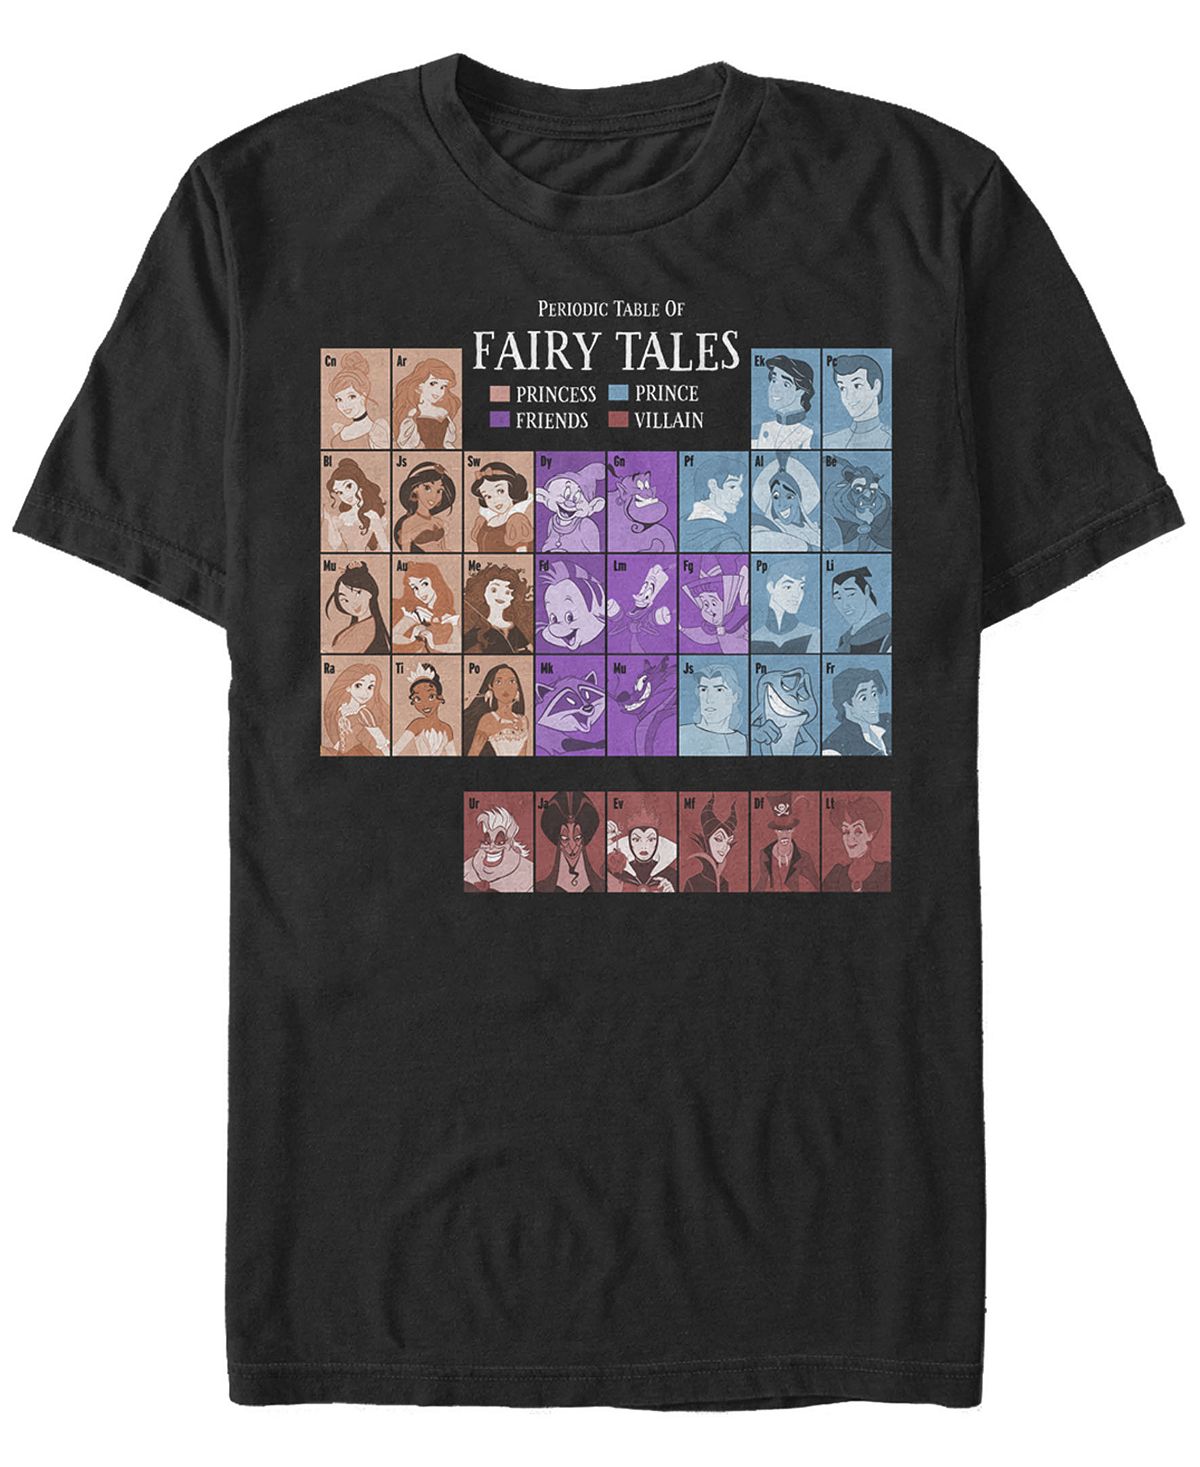 Мужская футболка с короткими рукавами princess periodic table of fairy tales Fifth Sun, черный фотографии